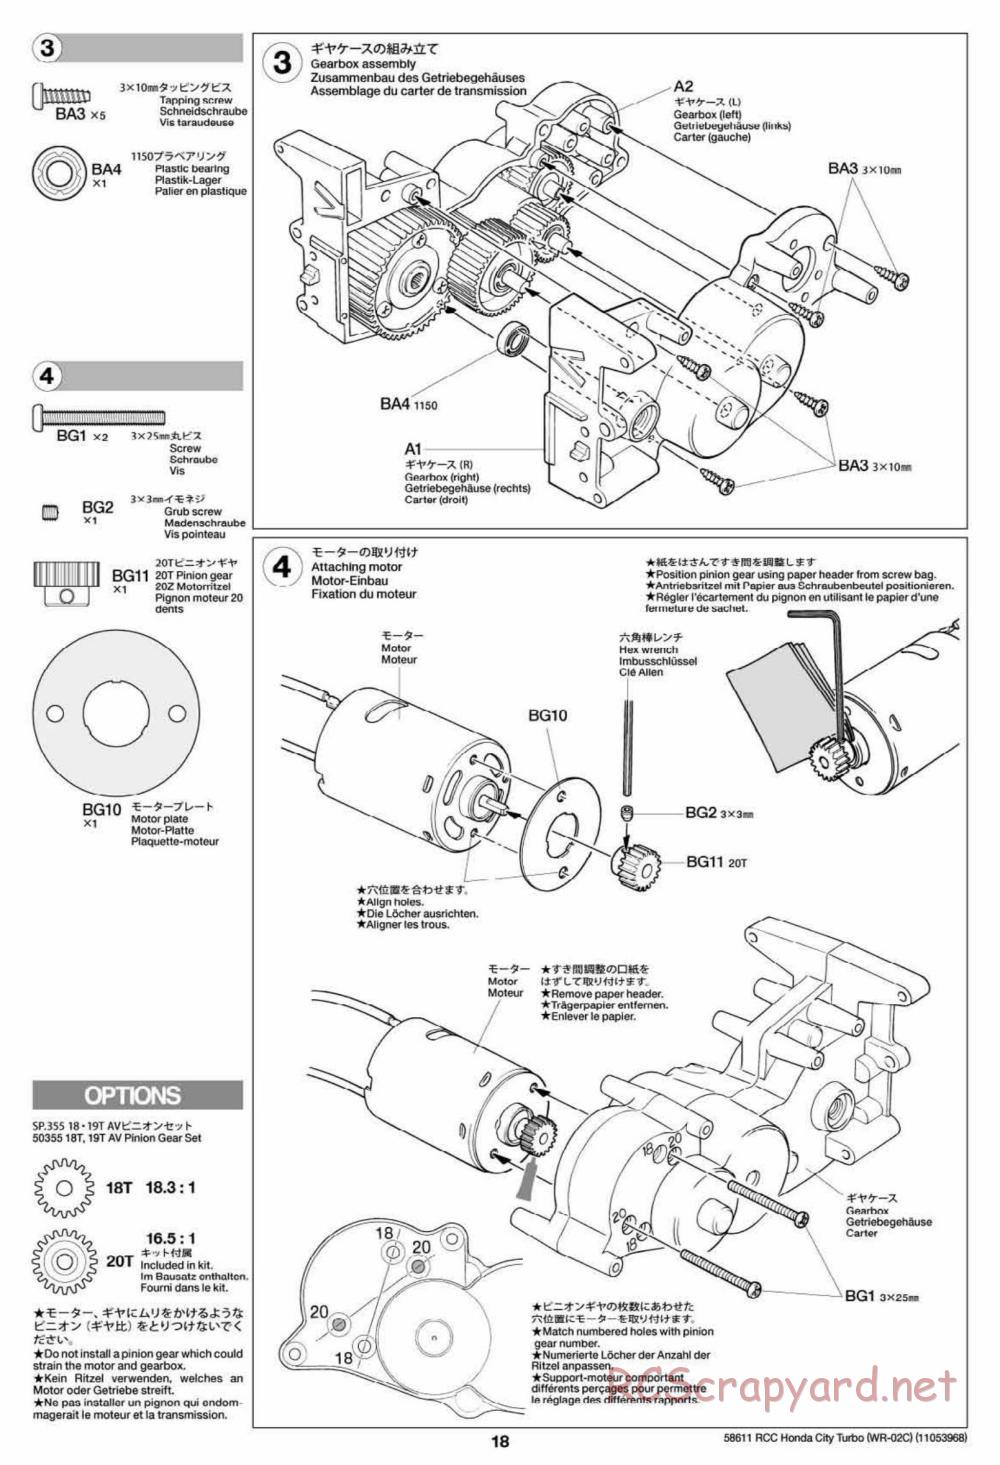 Tamiya - WR-02C Chassis - Manual - Page 18